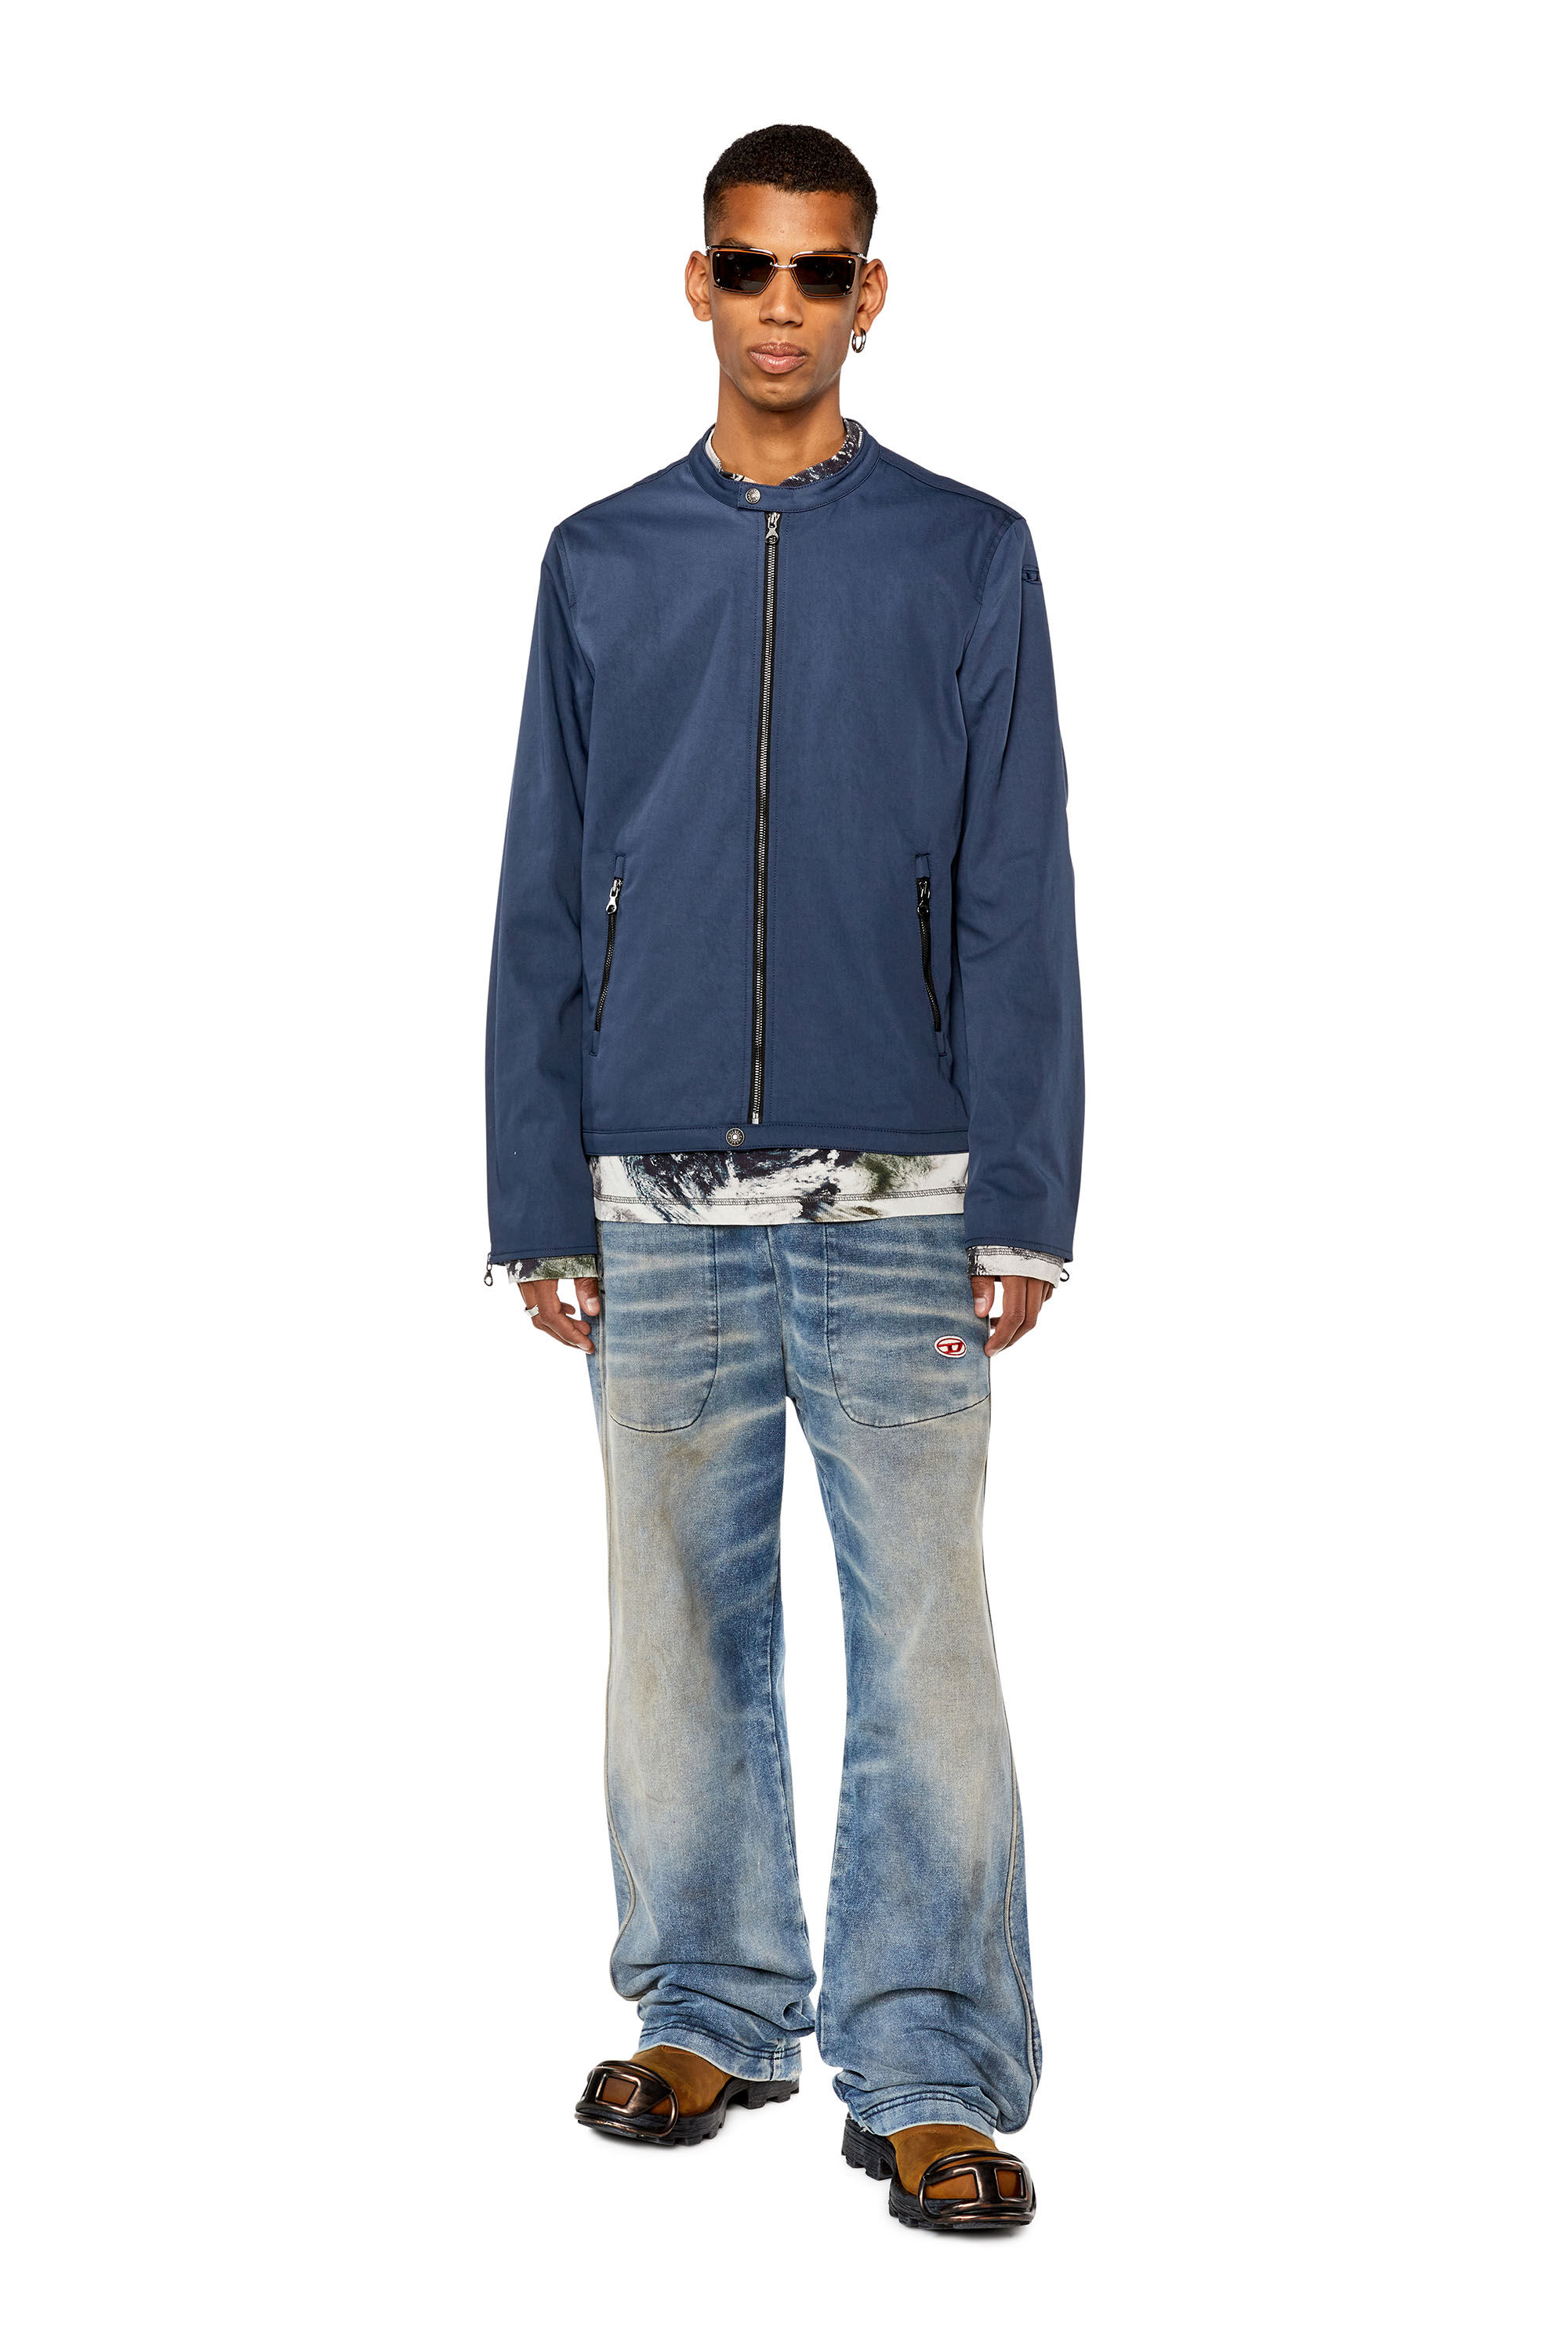 Diesel - J-GLORY-NW, Man Biker jacket in cotton-touch nylon in Blue - Image 1